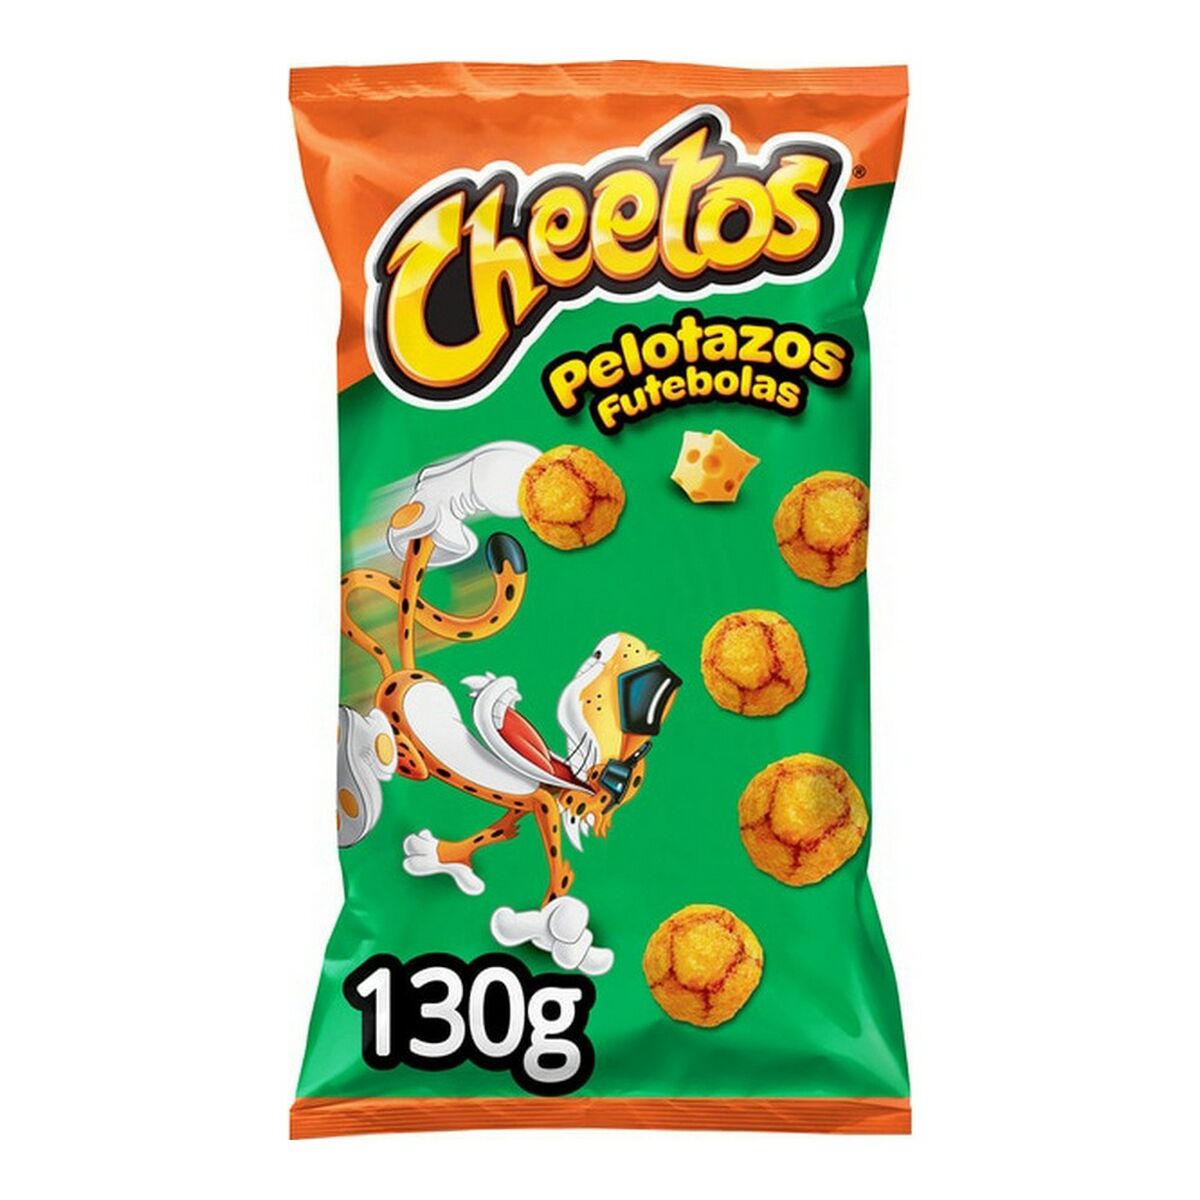 Snacks Cheetos Pelotazos (130 g)